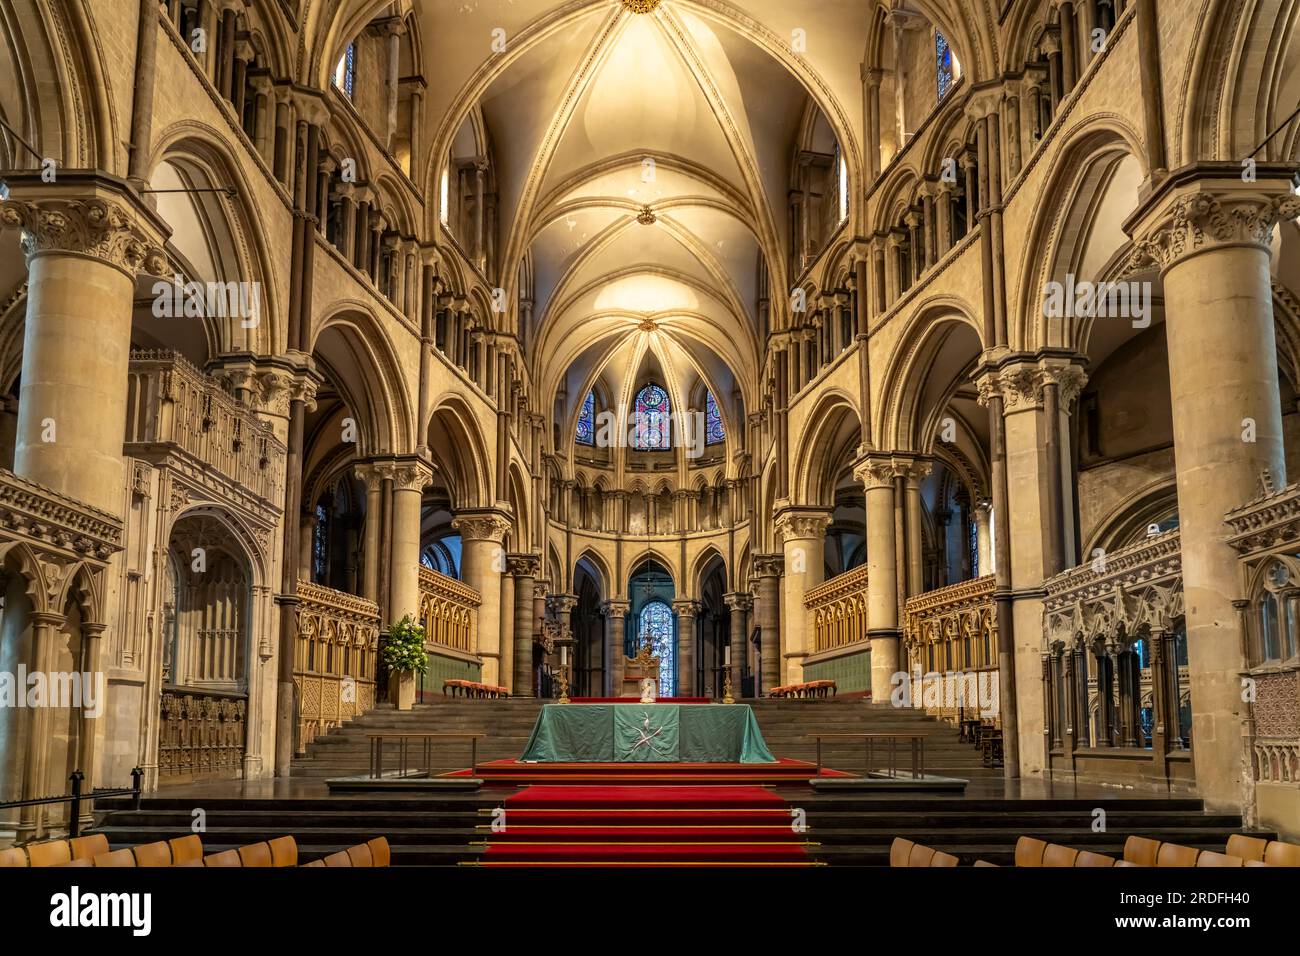 Innenraum der Kathedrale von Canterbury, England, Großbritannien, Europa | Canterbury Cathedral interior, Angleterre, Royaume-Uni de Grande-Bretagne, Banque D'Images